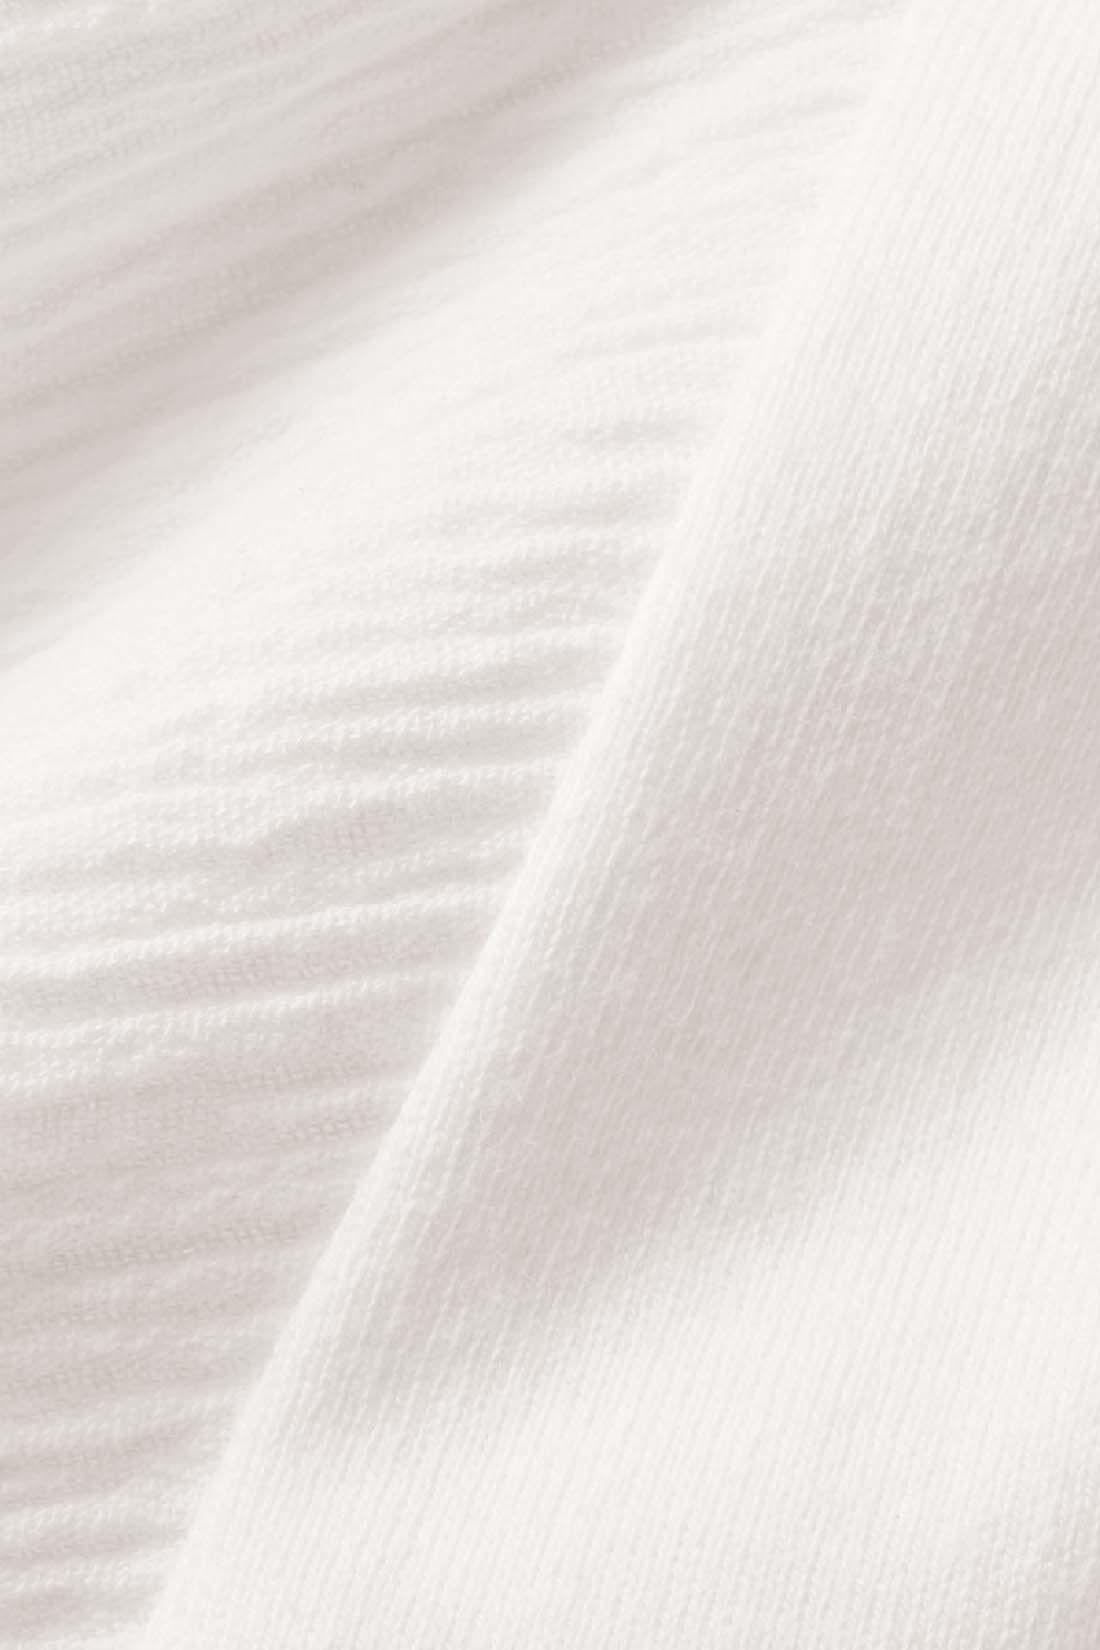 Live in  comfort|Live love cottonプロジェクト　リブ イン コンフォート　はまじとコラボ 袖ふんわりオーガニックコットンブラウスTシャツ〈ホワイト〉|袖は軽やかな楊柳素材。身ごろ部分はほどよい厚みのカットソーです。